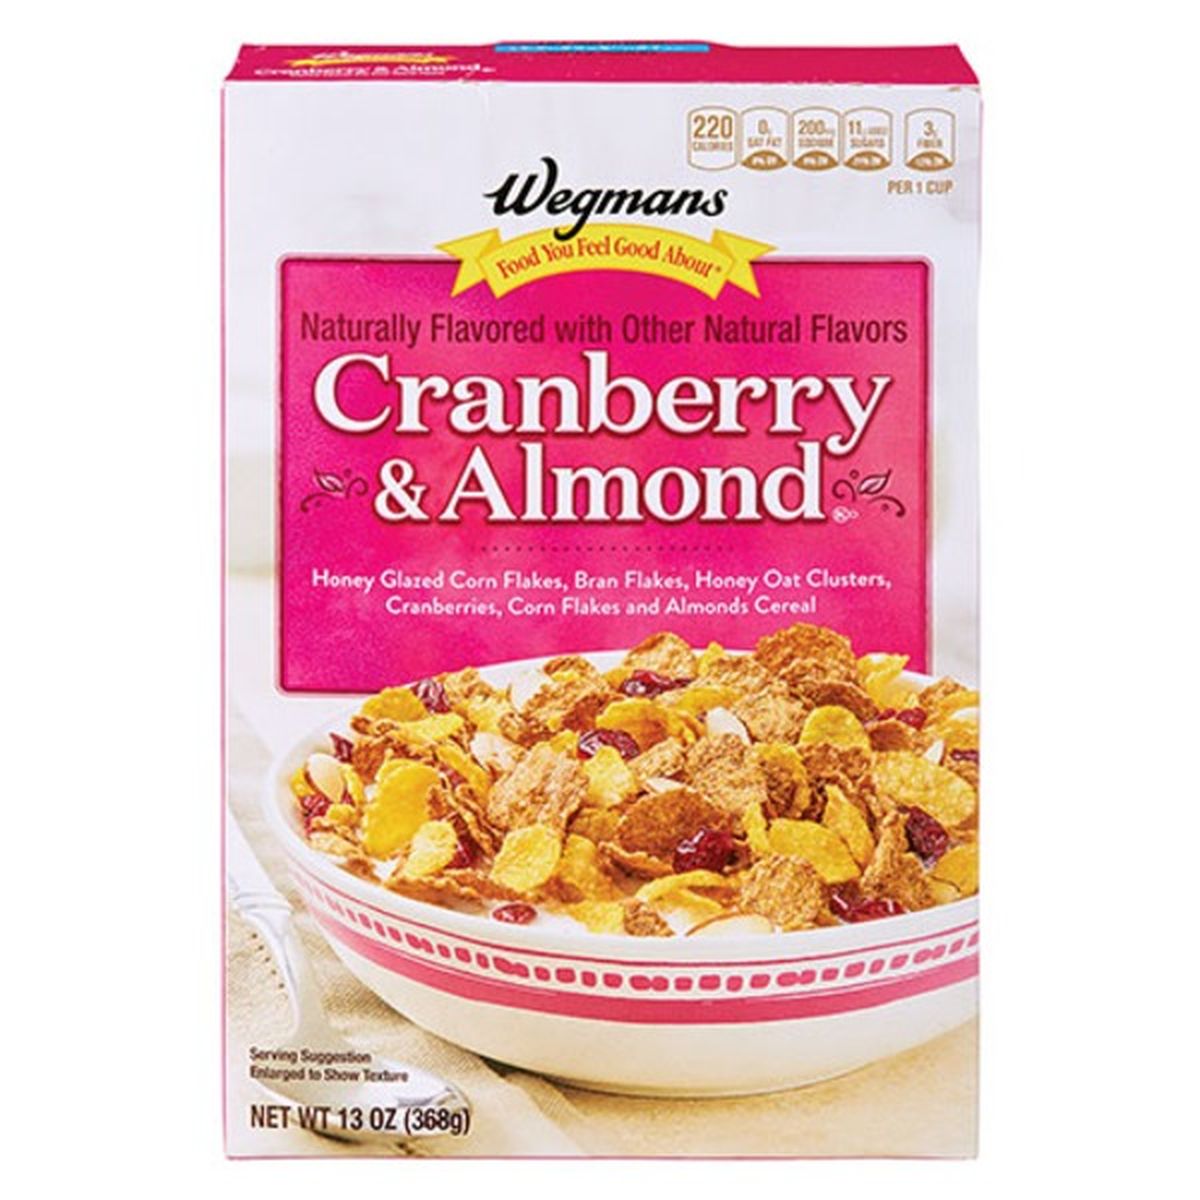 Calories in Wegmans Cranberry & Almond Cereal